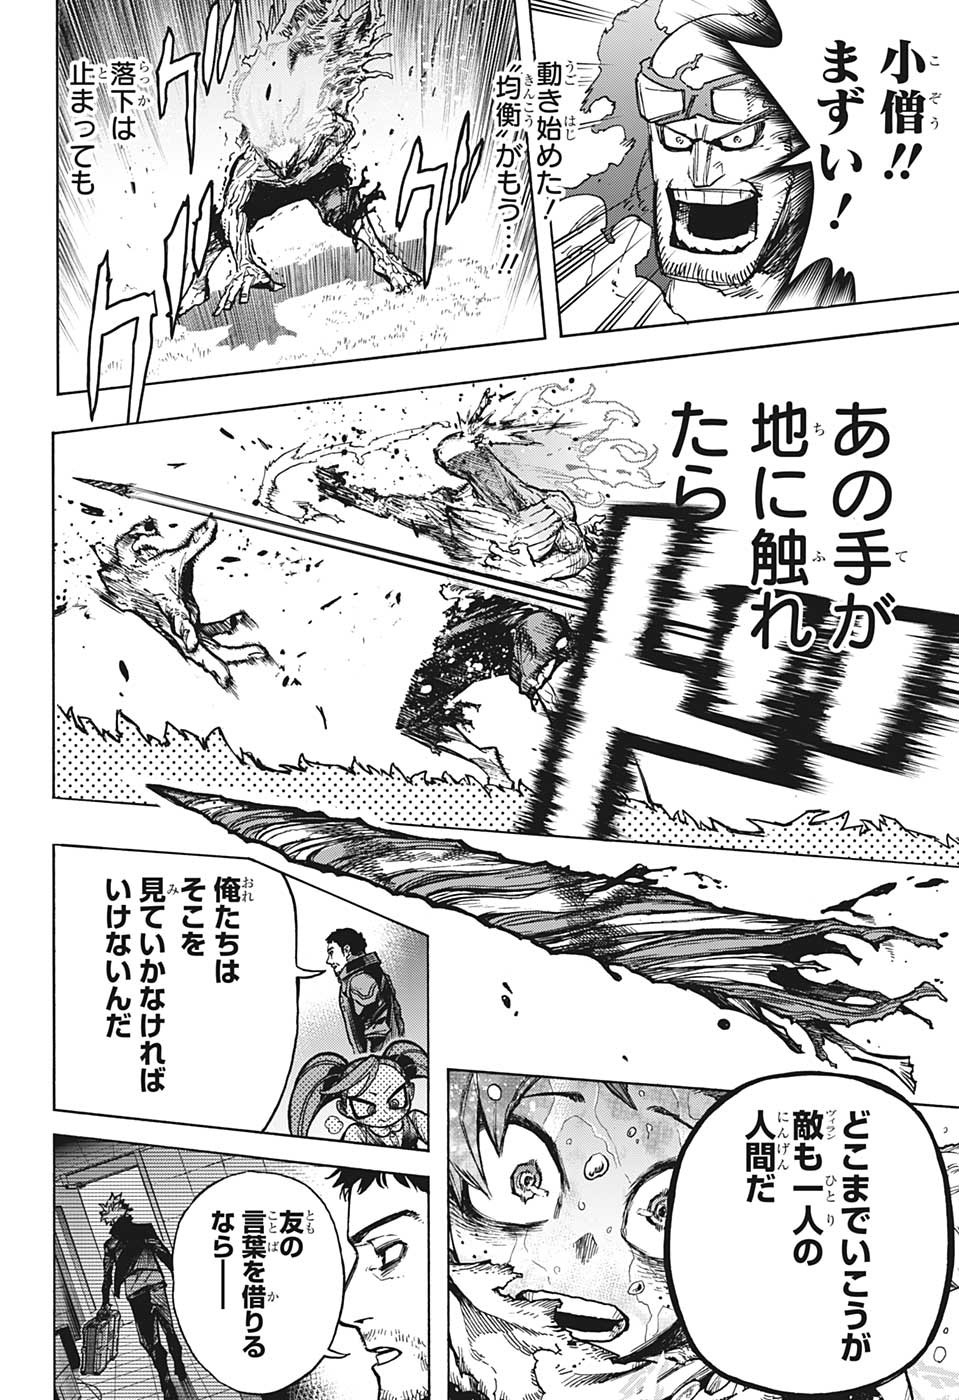 Boku no Hero Academia - Chapter 378 - Page 14